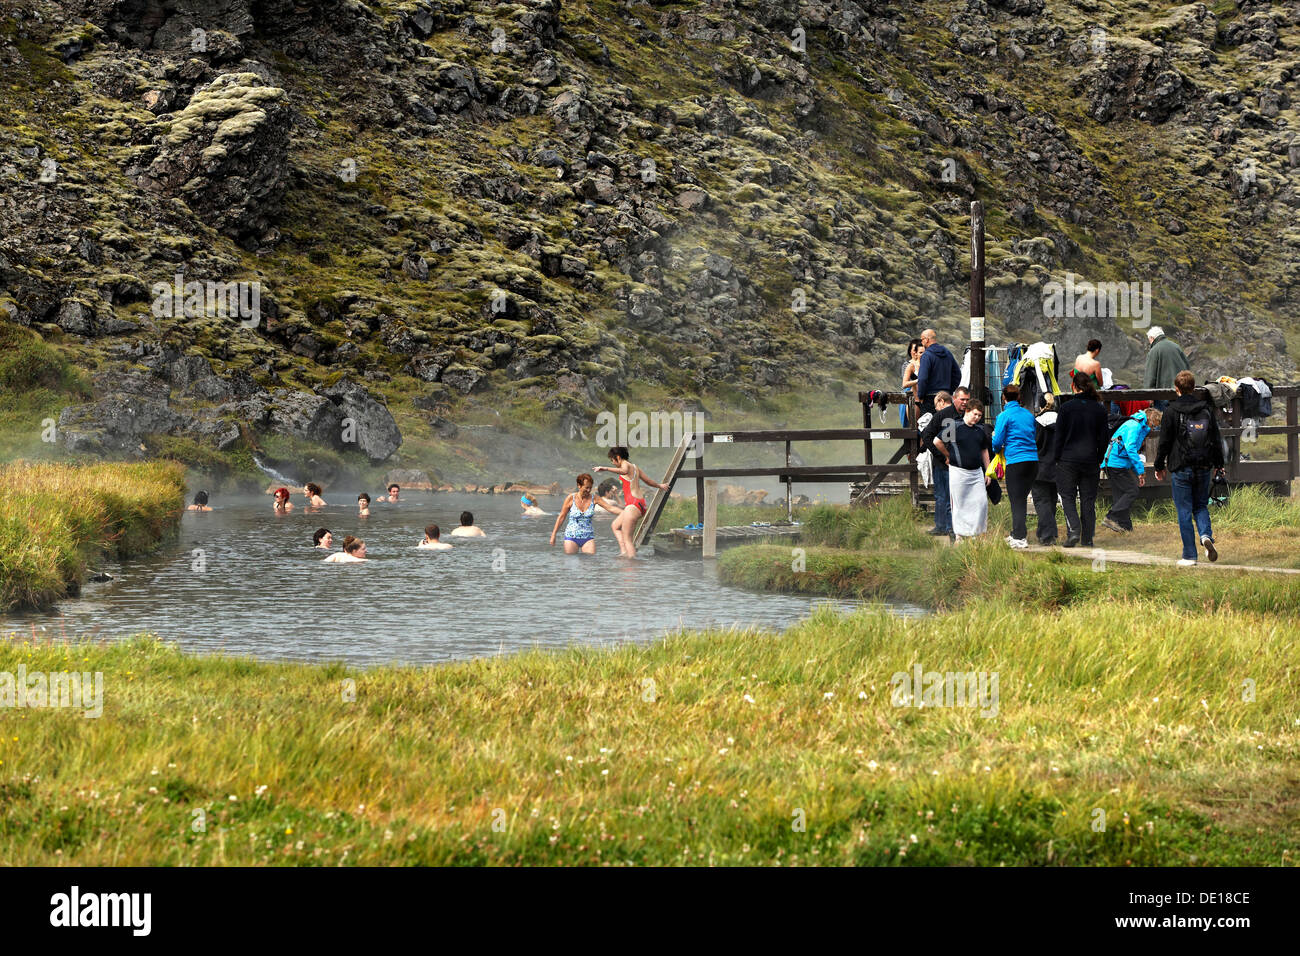 Hot spring or natural pool, Landmannalaugar Iceland Stock Photo